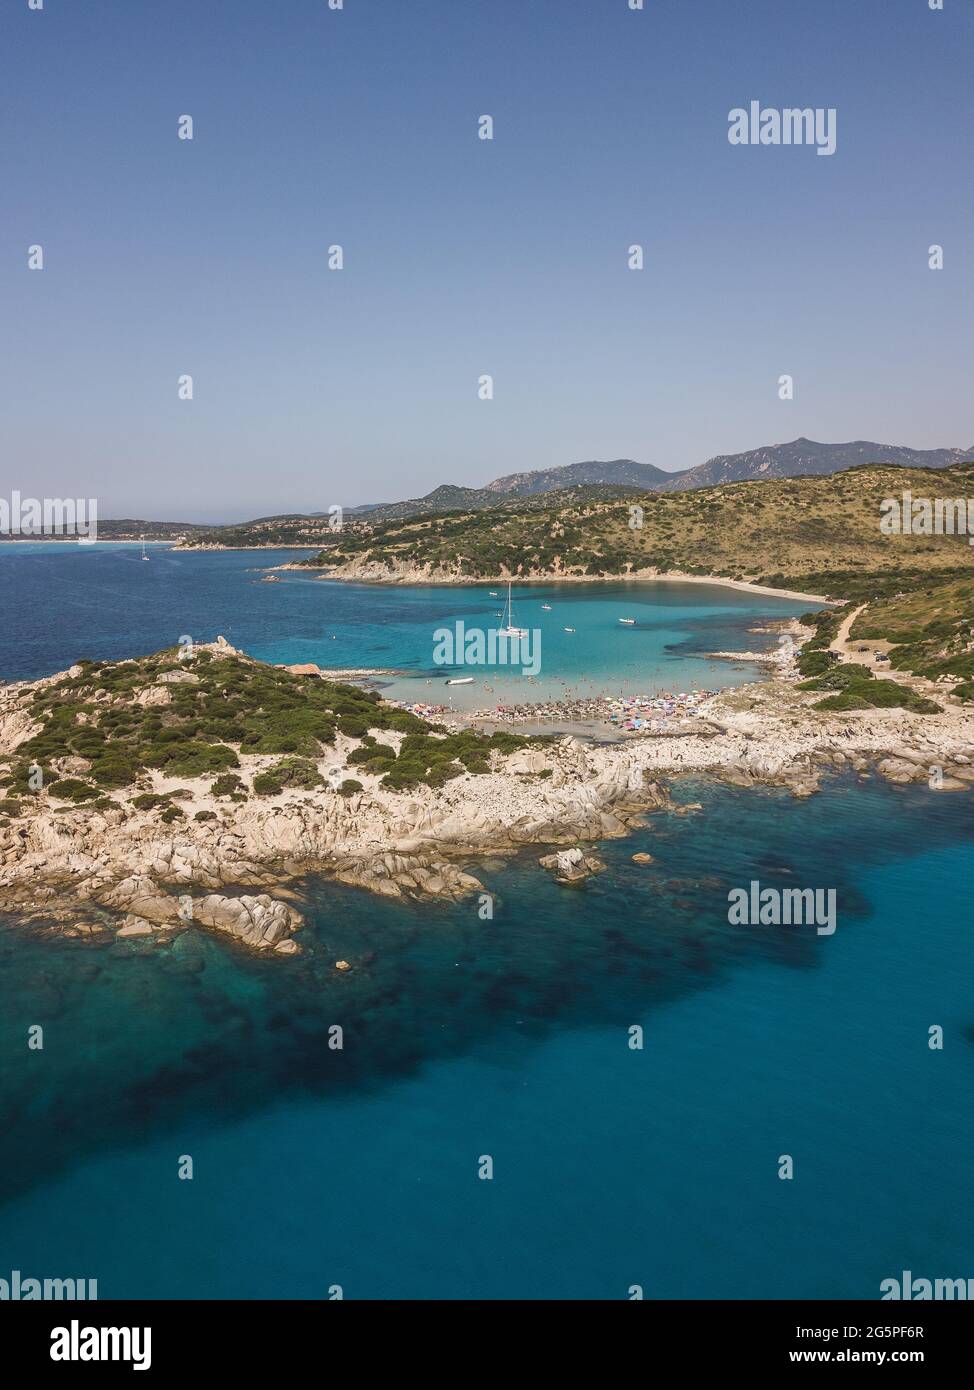 SARDEGNA PUNTA MOLENTIS, ITALY - Jul 05, 2019: Punta Molentis Sardegna Sardinien Drohne drone landscape Stock Photo